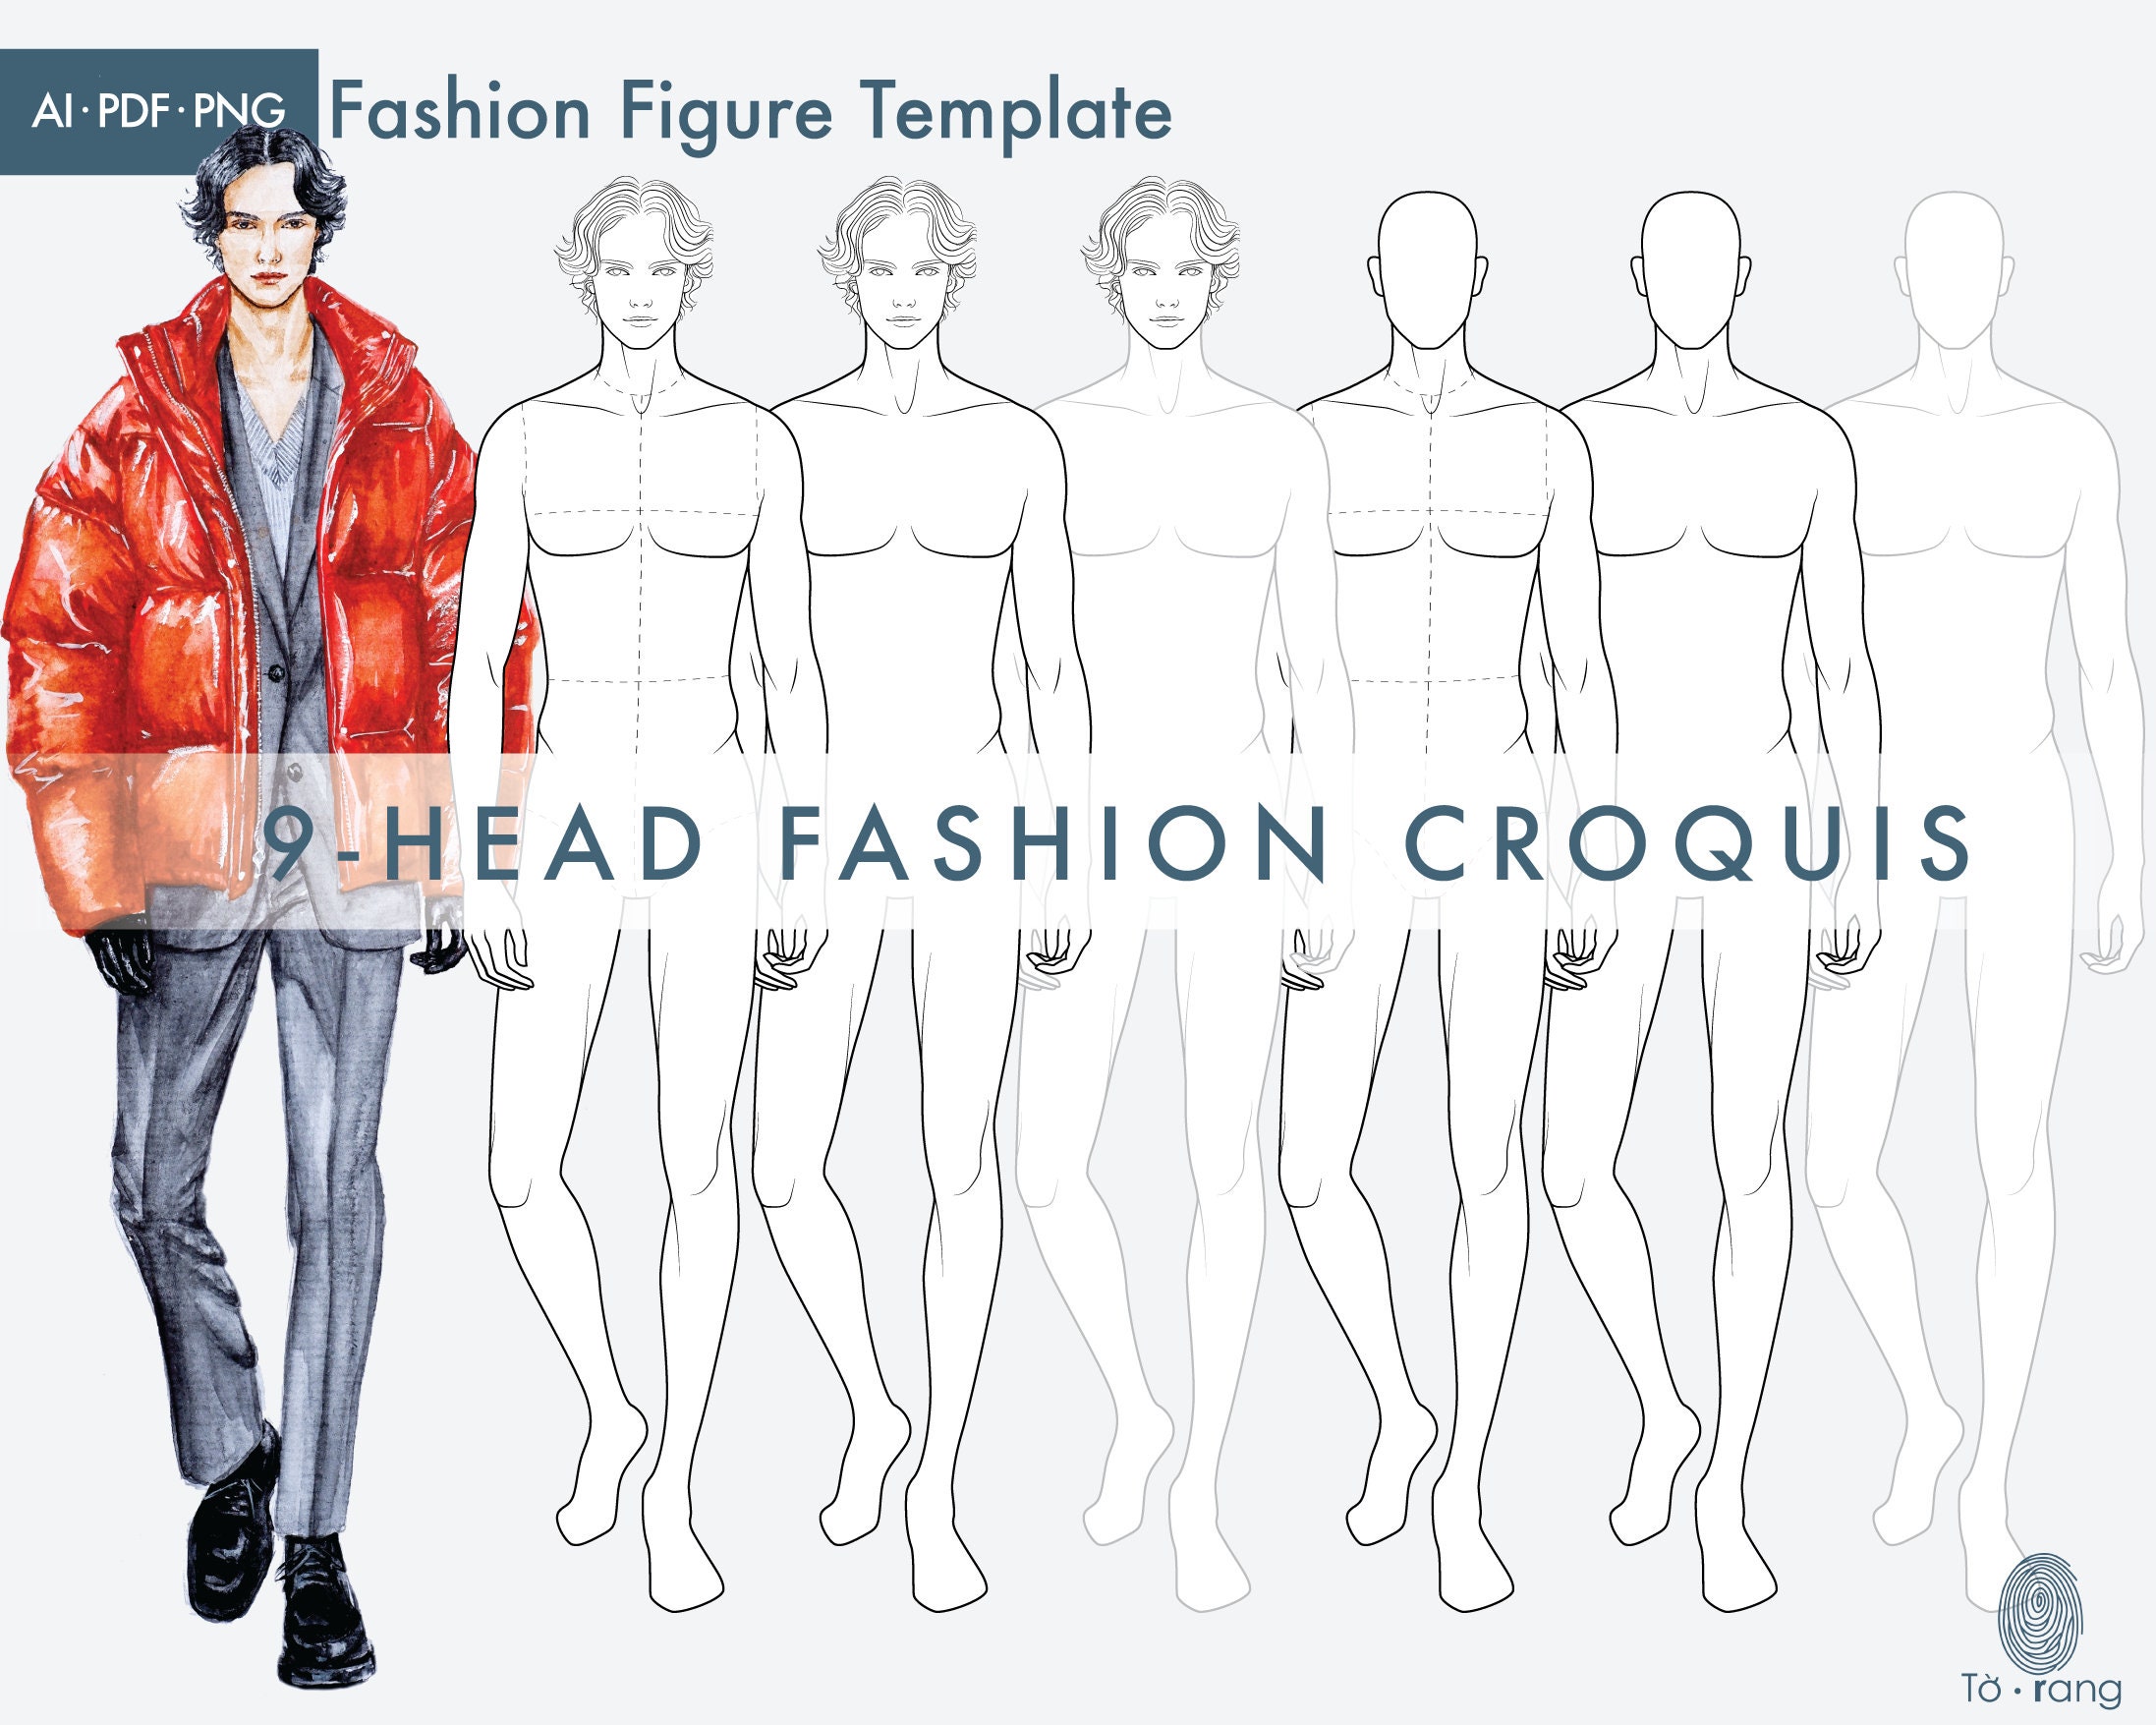 Male Fashion Figure Template – 9 Heads Fashion Croquis – Catwalk Pose -  Crella